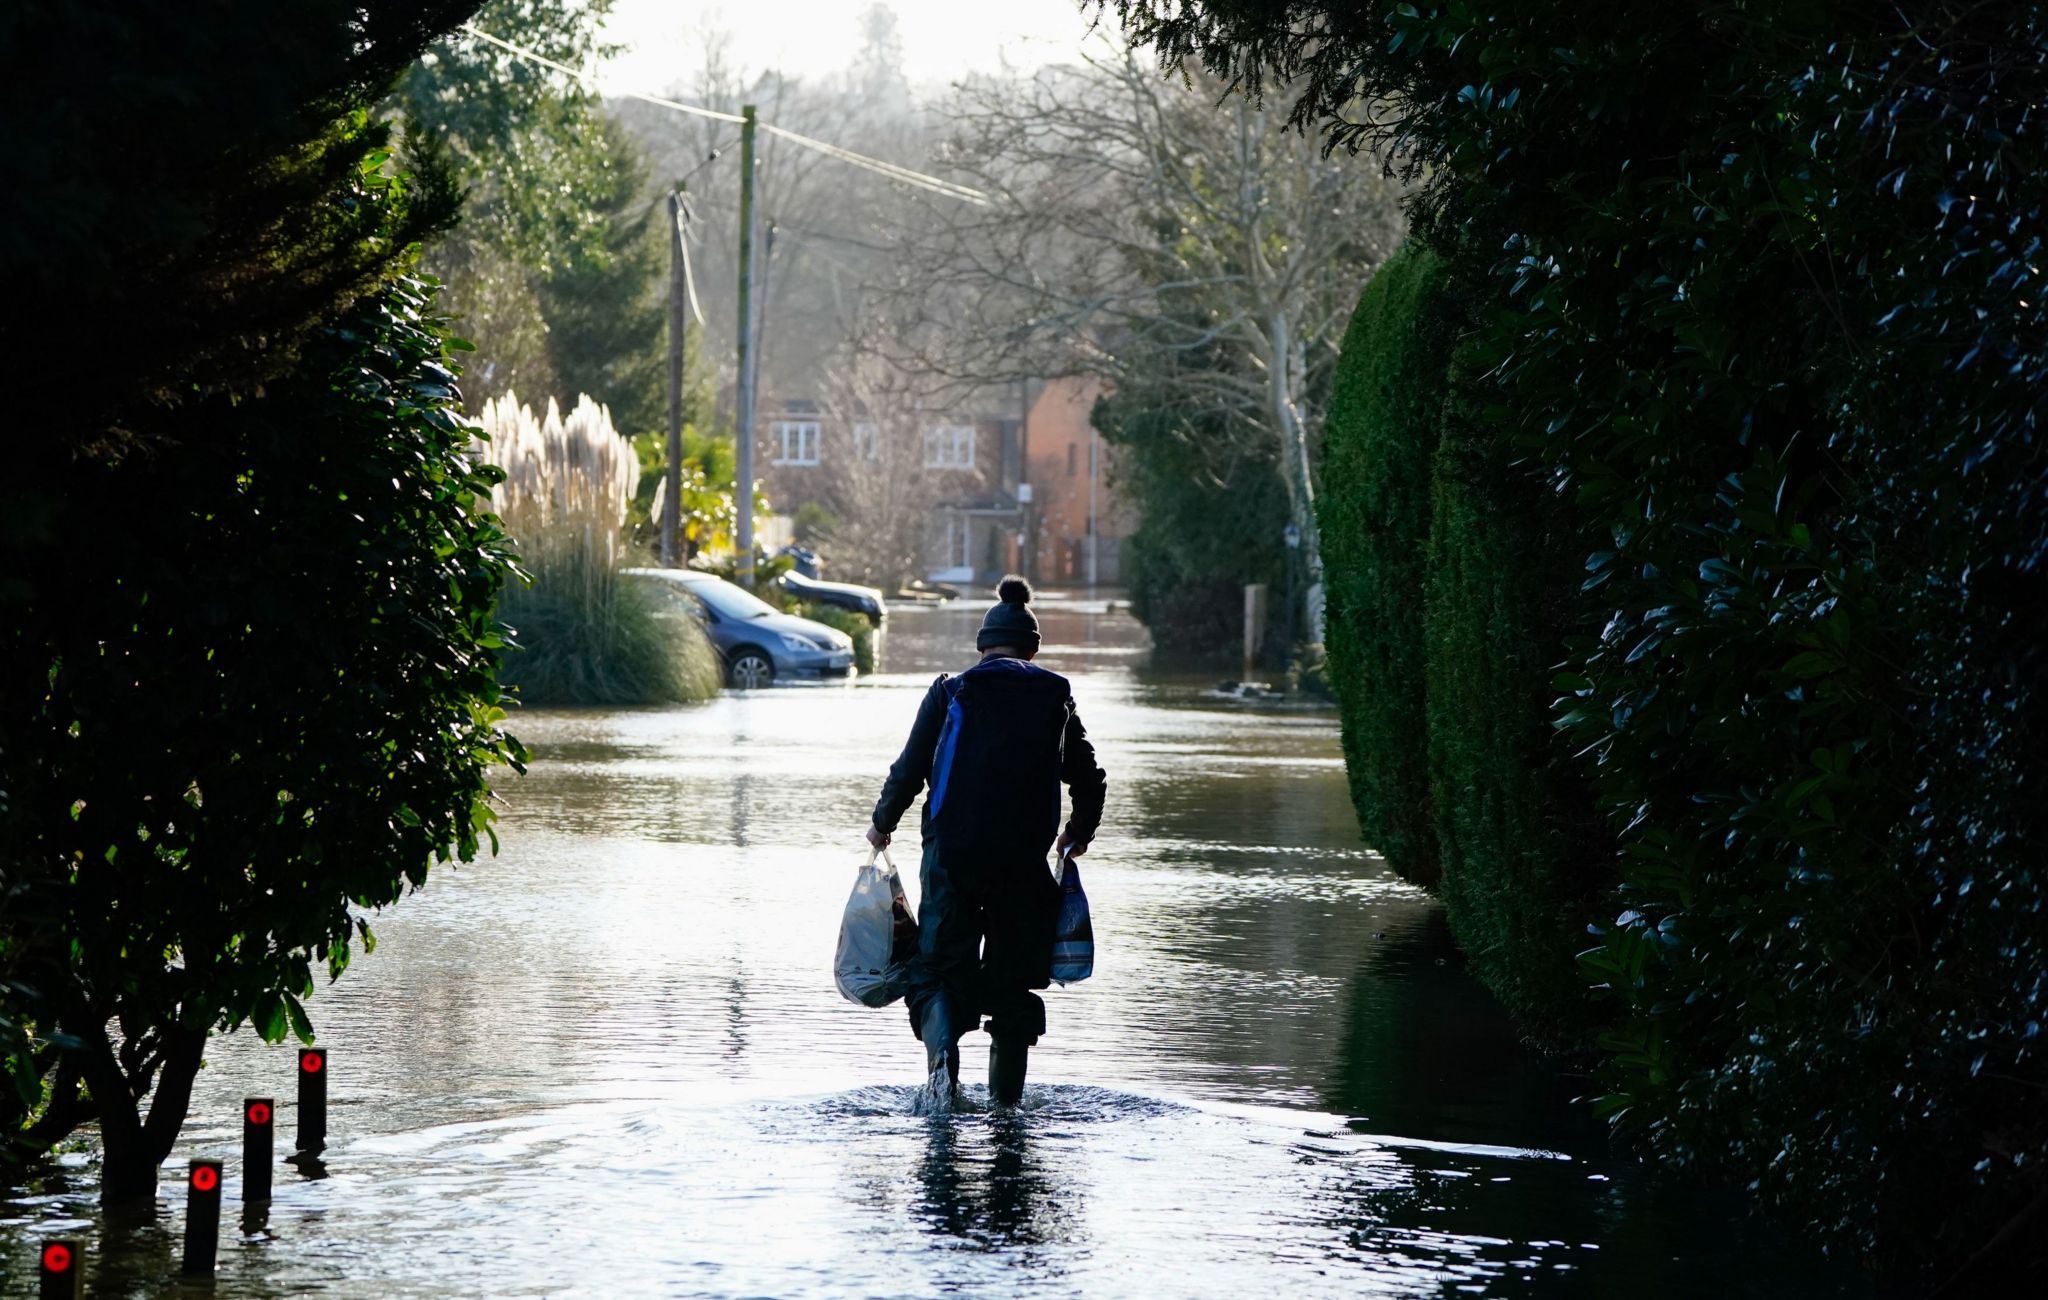 A man walks through floodwaters